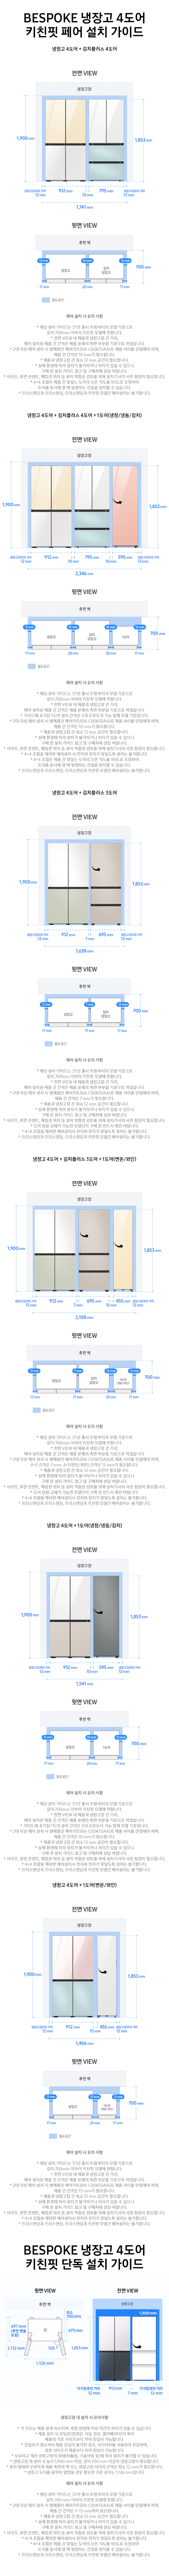 bespoke_4door_kitchen-fit_RF60_installation_guide.jpg